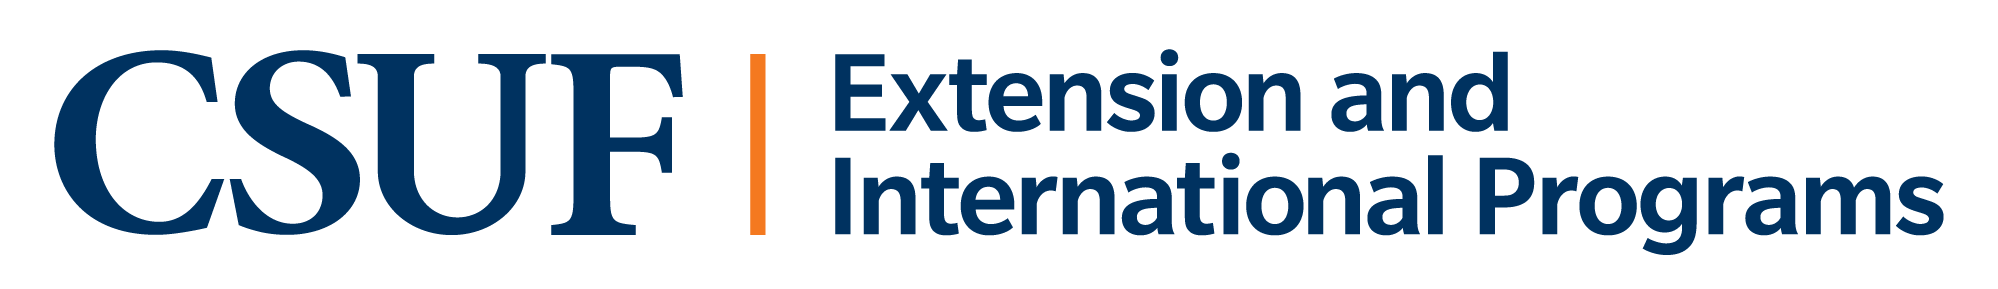 CSUF Extension and International Programs logo